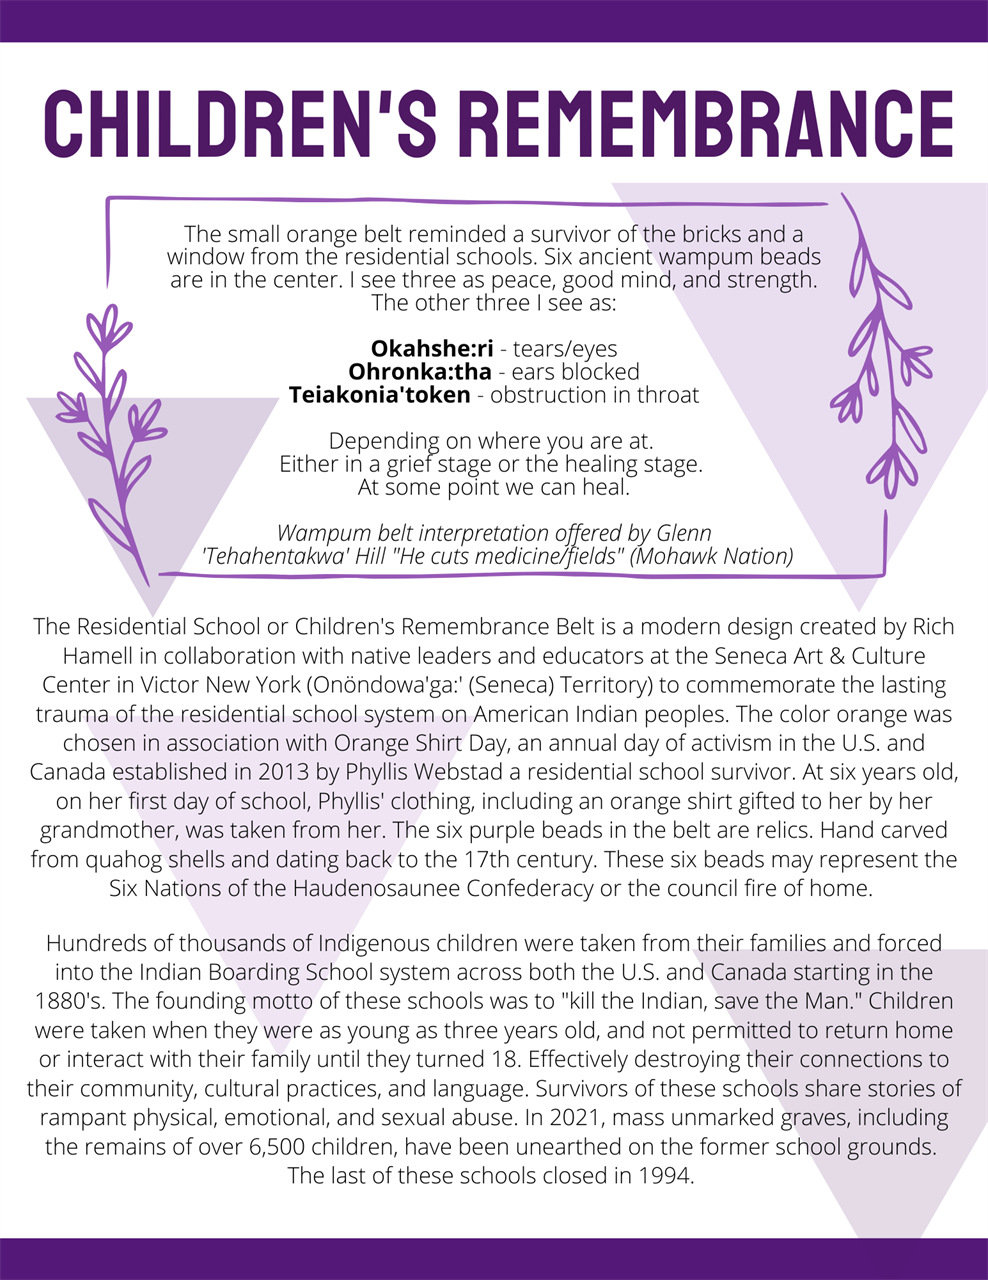 Children’s Remembrance Belt information